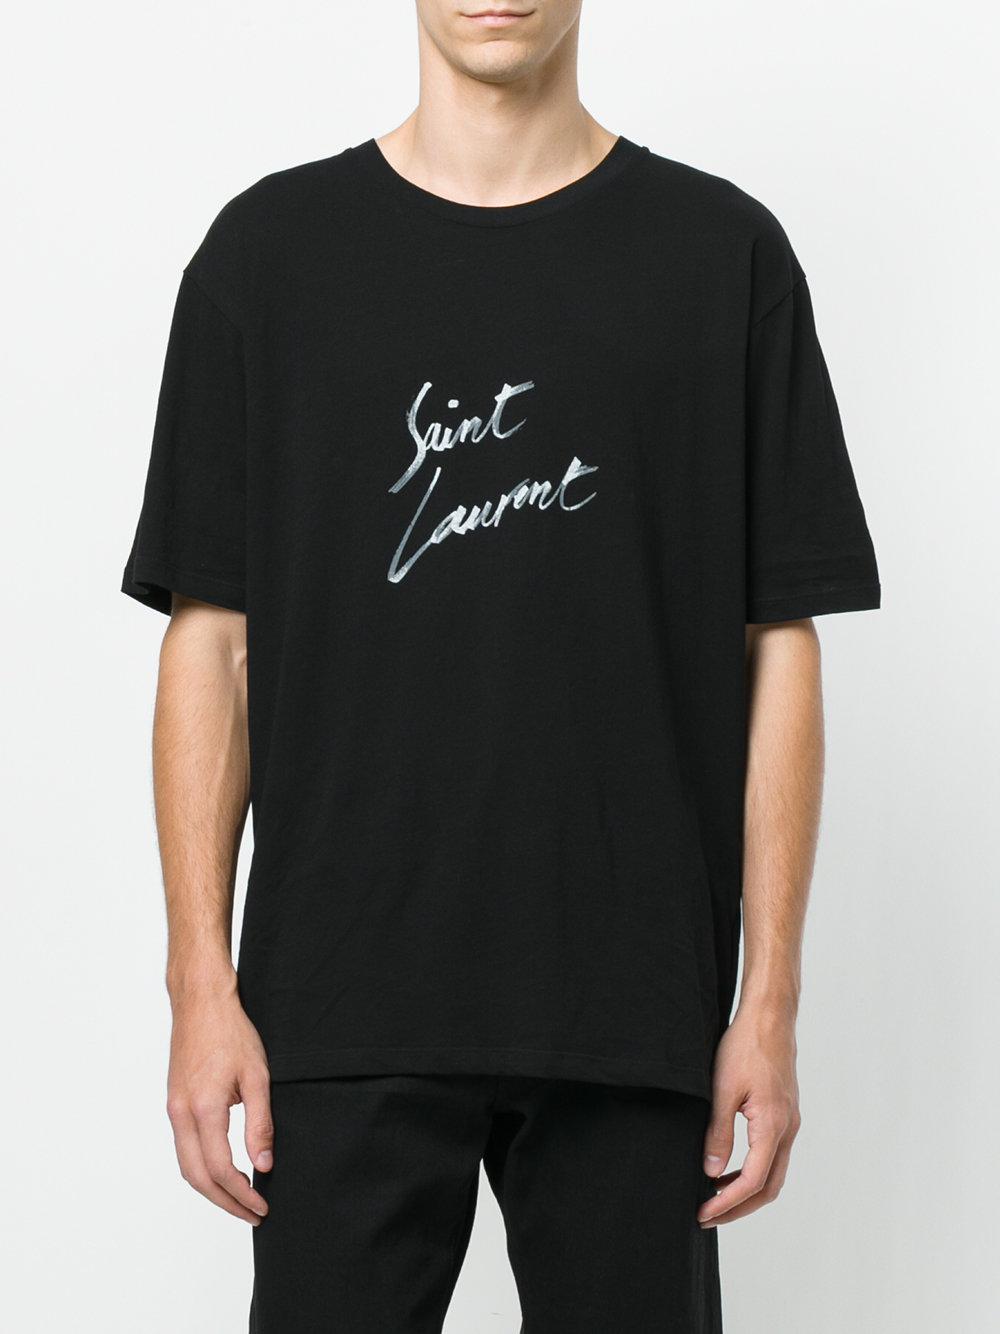 Saint Laurent Cotton Oversized Signature T-shirt in Black for Men - Lyst